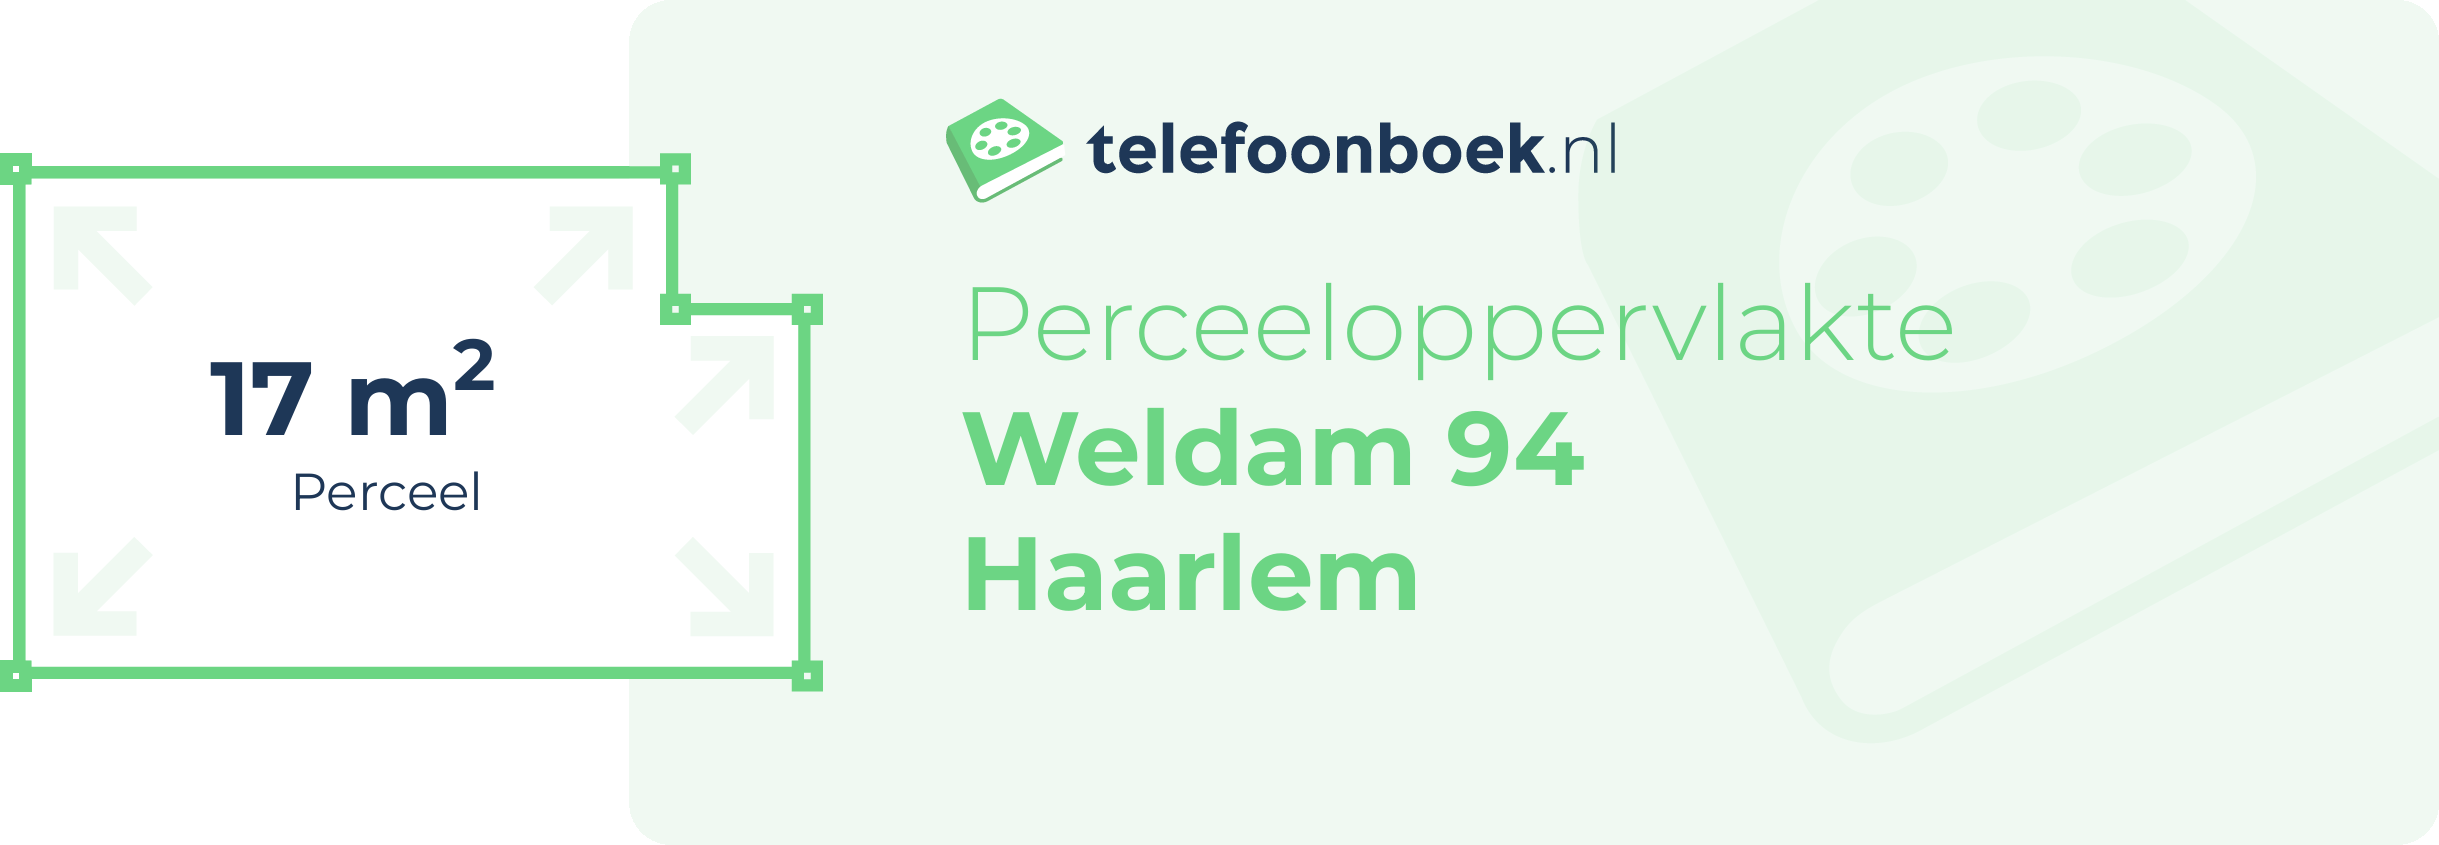 Perceeloppervlakte Weldam 94 Haarlem